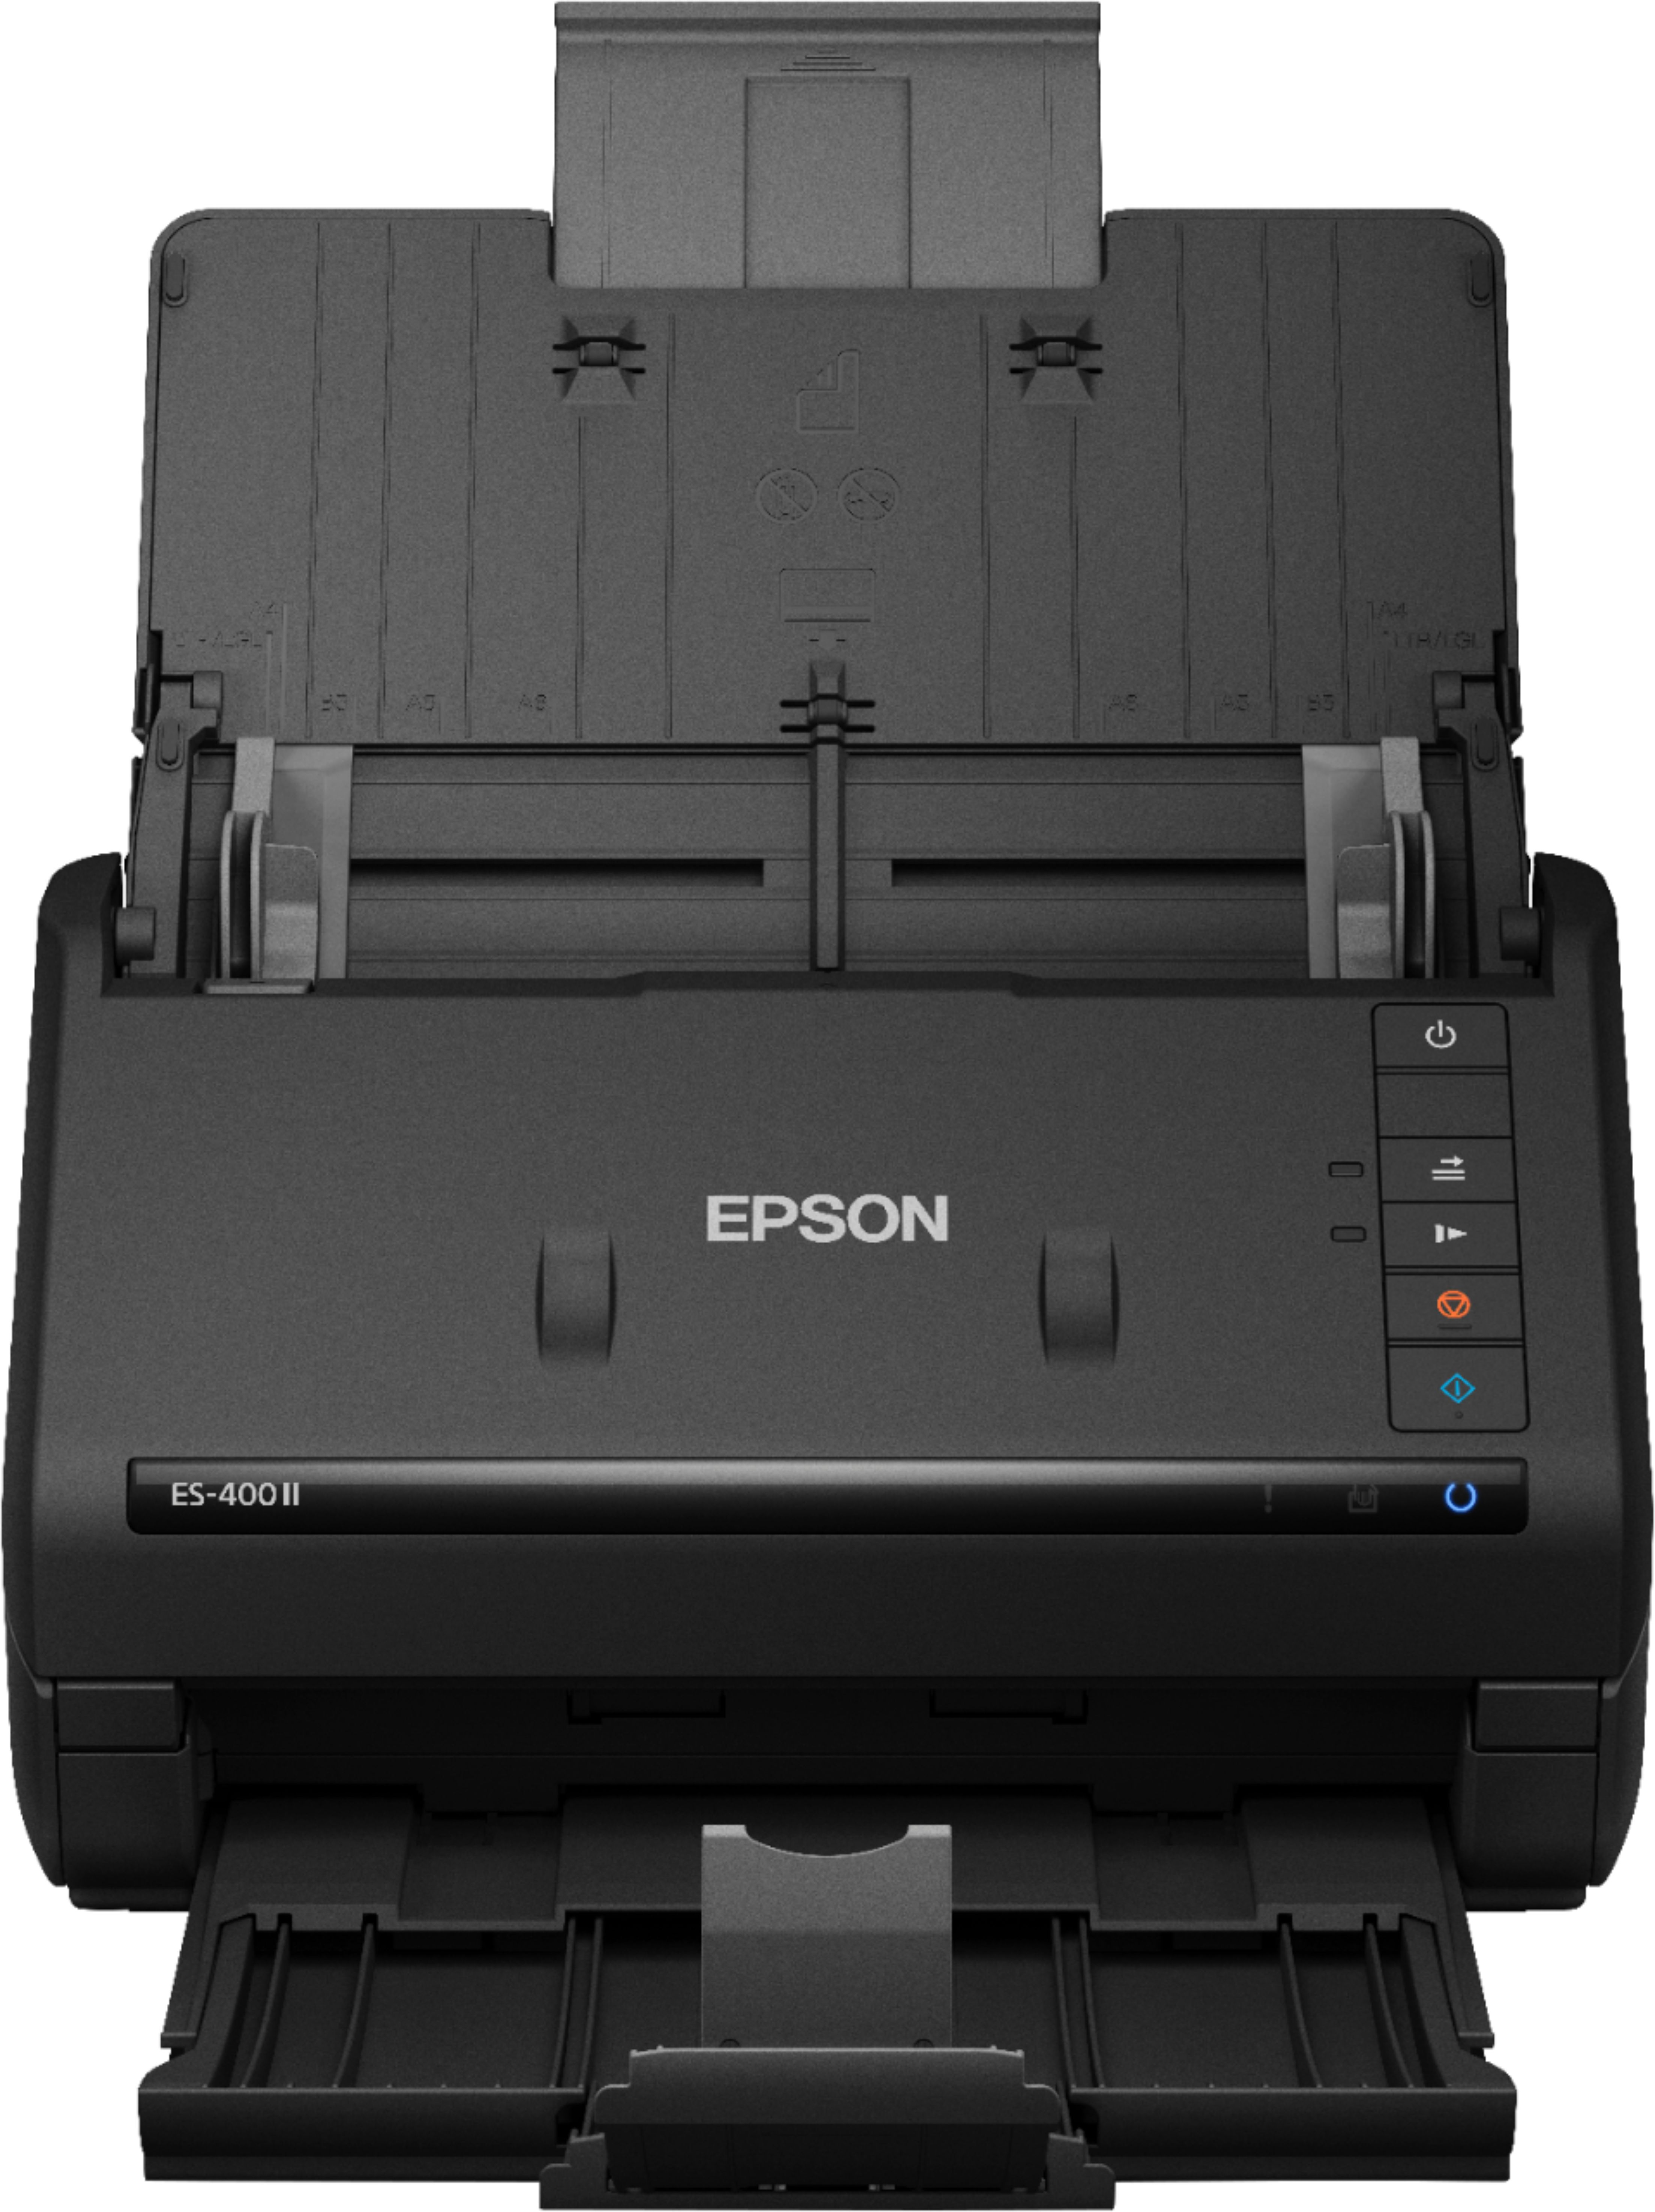 epson 400 scanner software download